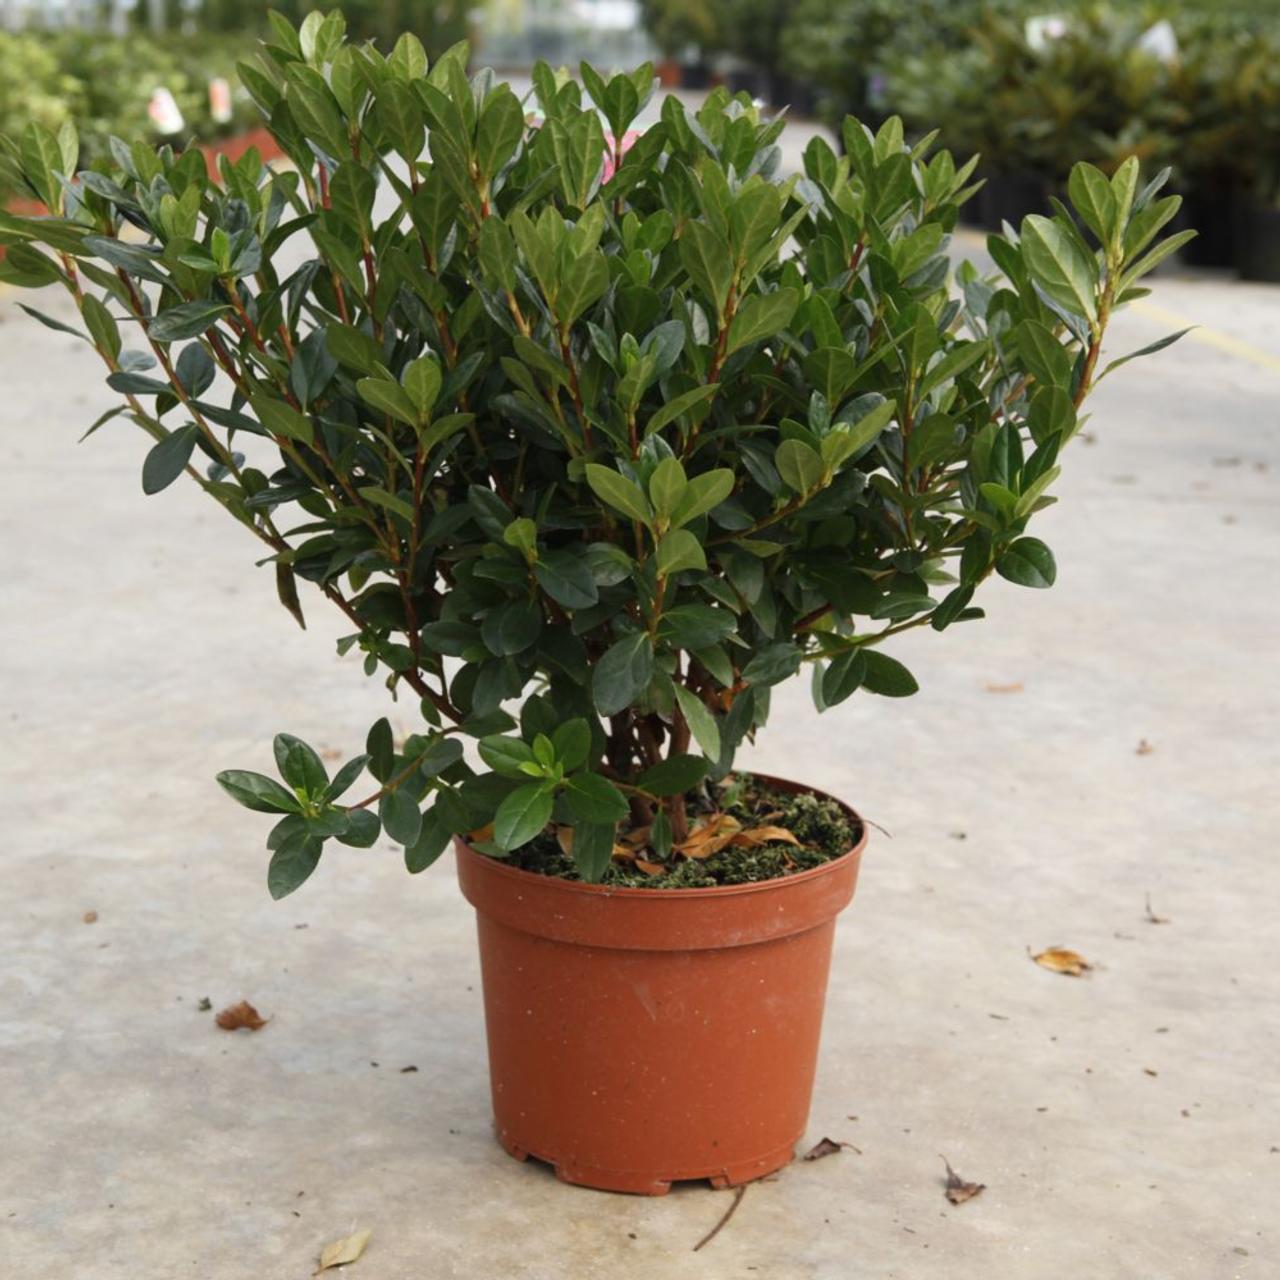 Rhododendron (AJ) 'Madame Galle' plant